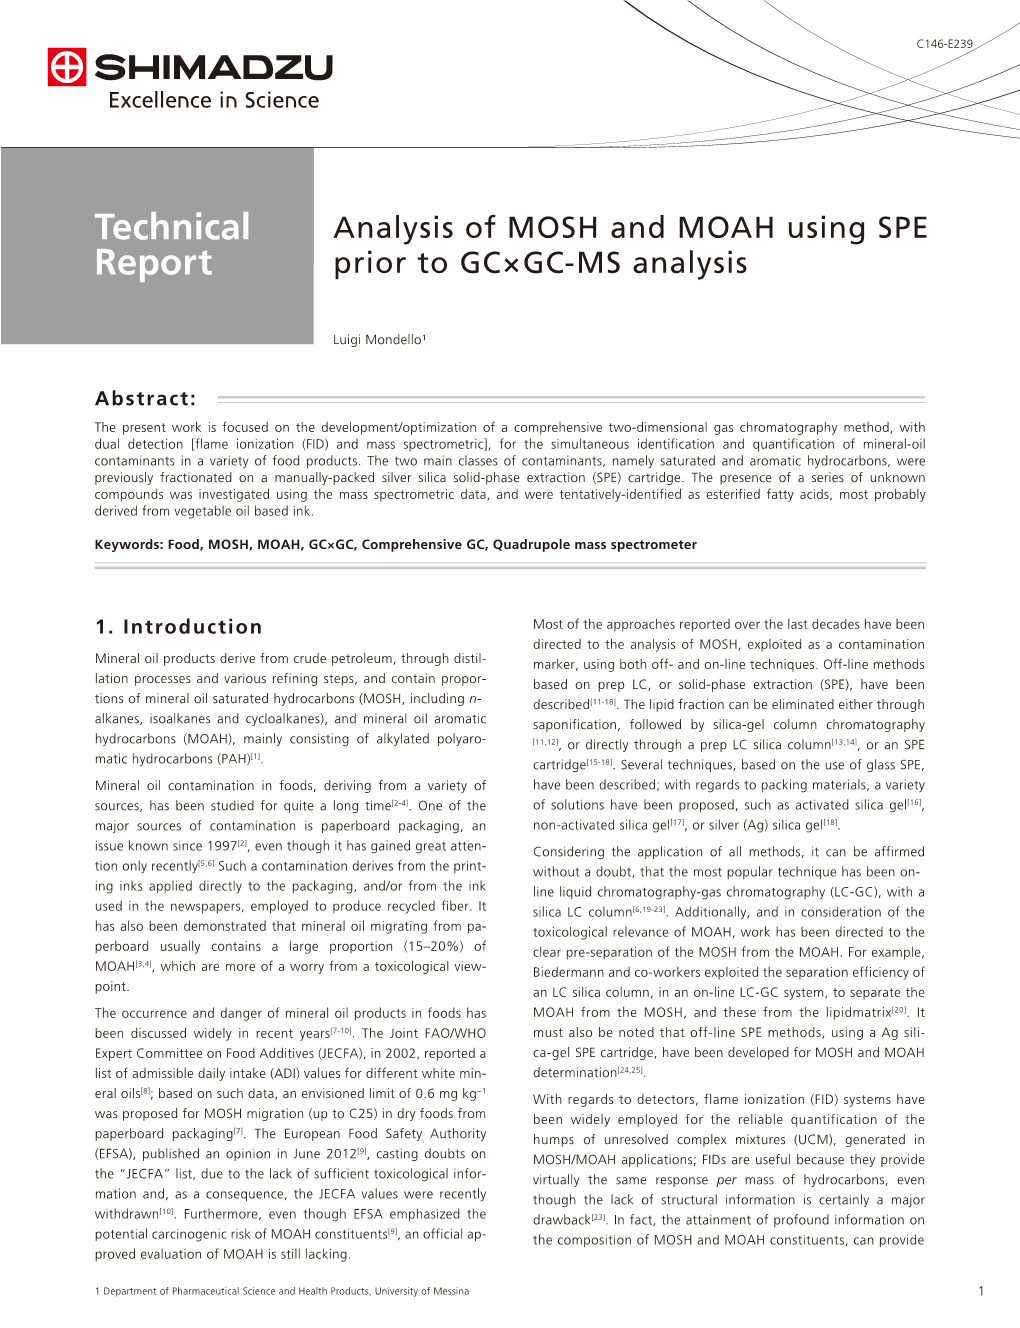 Analysis of MOSH and MOAH Using SPE Prior to GC×GC-MS Analysis